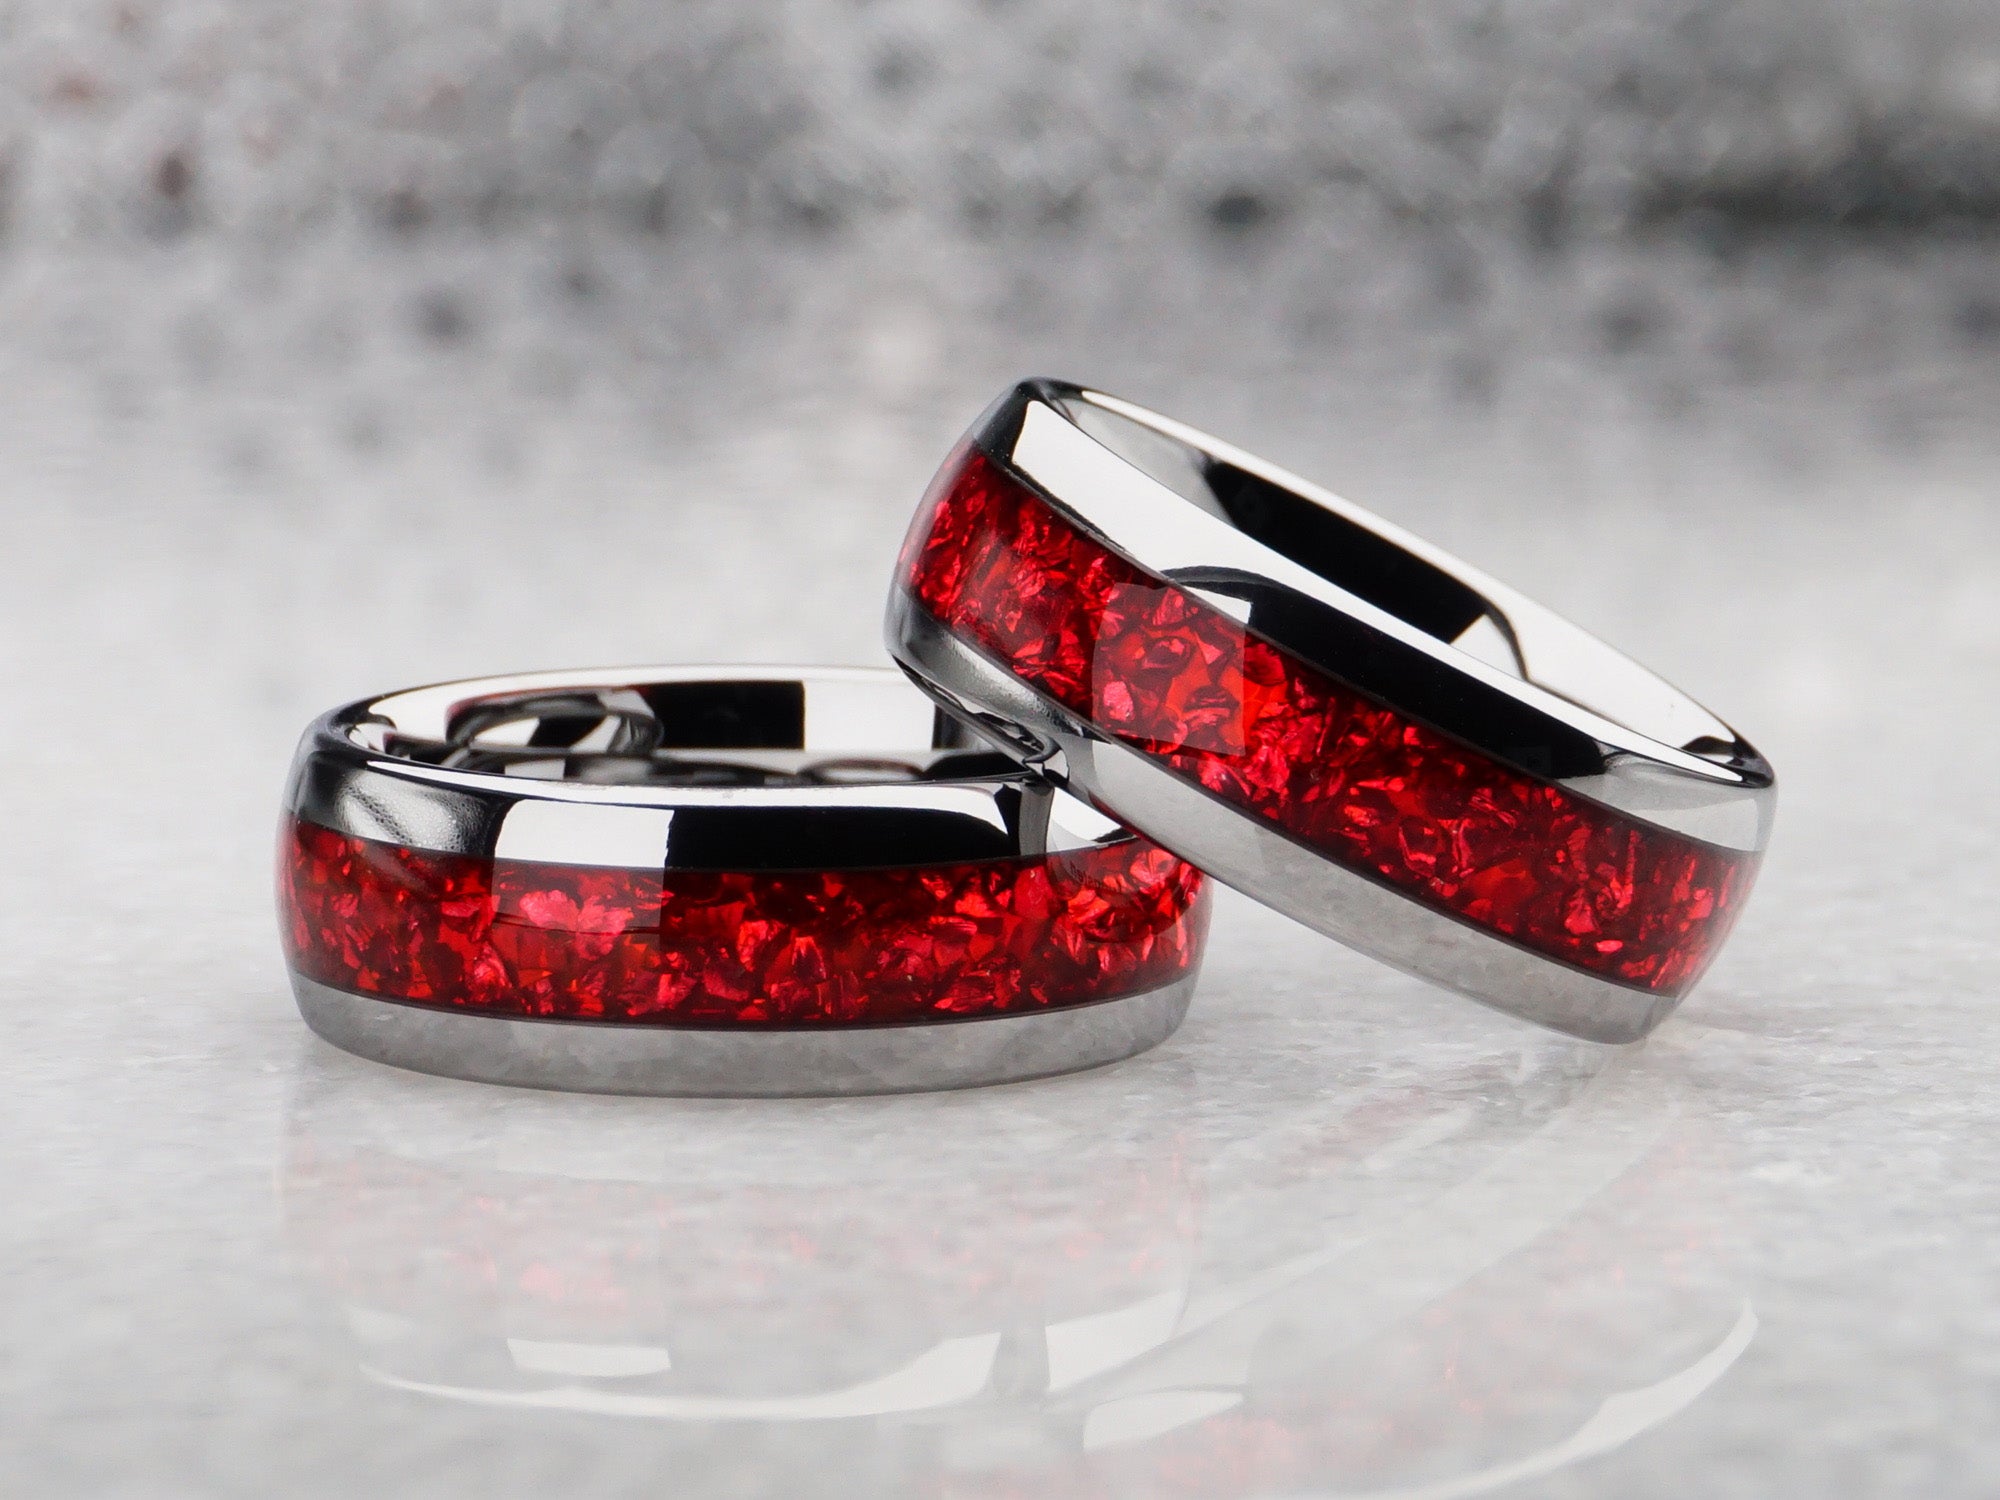 8mm red garnet ring, polished silver tungsten ring with lab garnet gemstone inlay, modern mens wedding ring